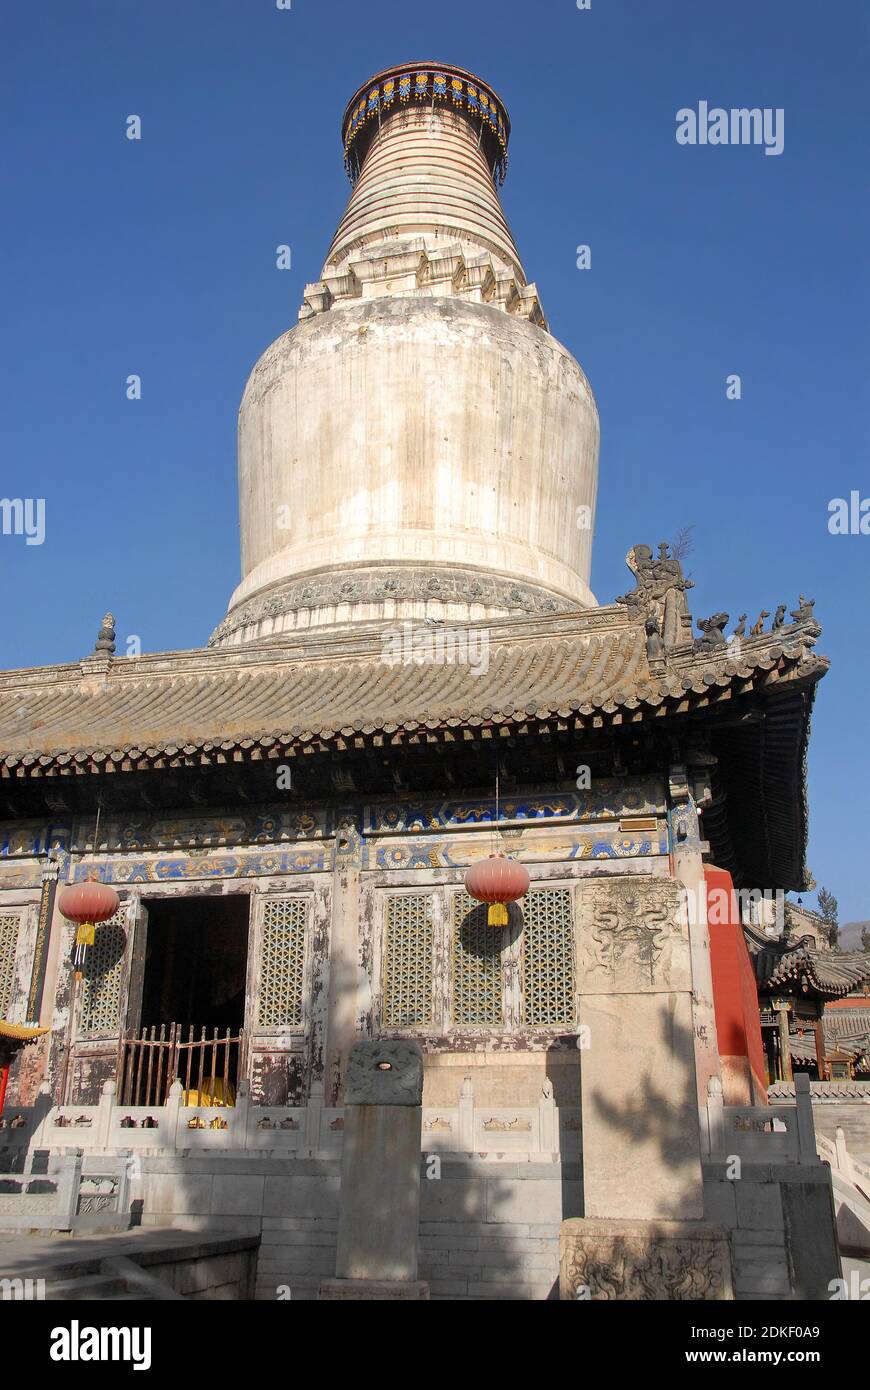 Wutaishan, Shanxi Province in China. Great White Pagoda or Dabaita or Sarira Stupa at Tayuan Temple, the symbol of Wutaishan. Stock Photo